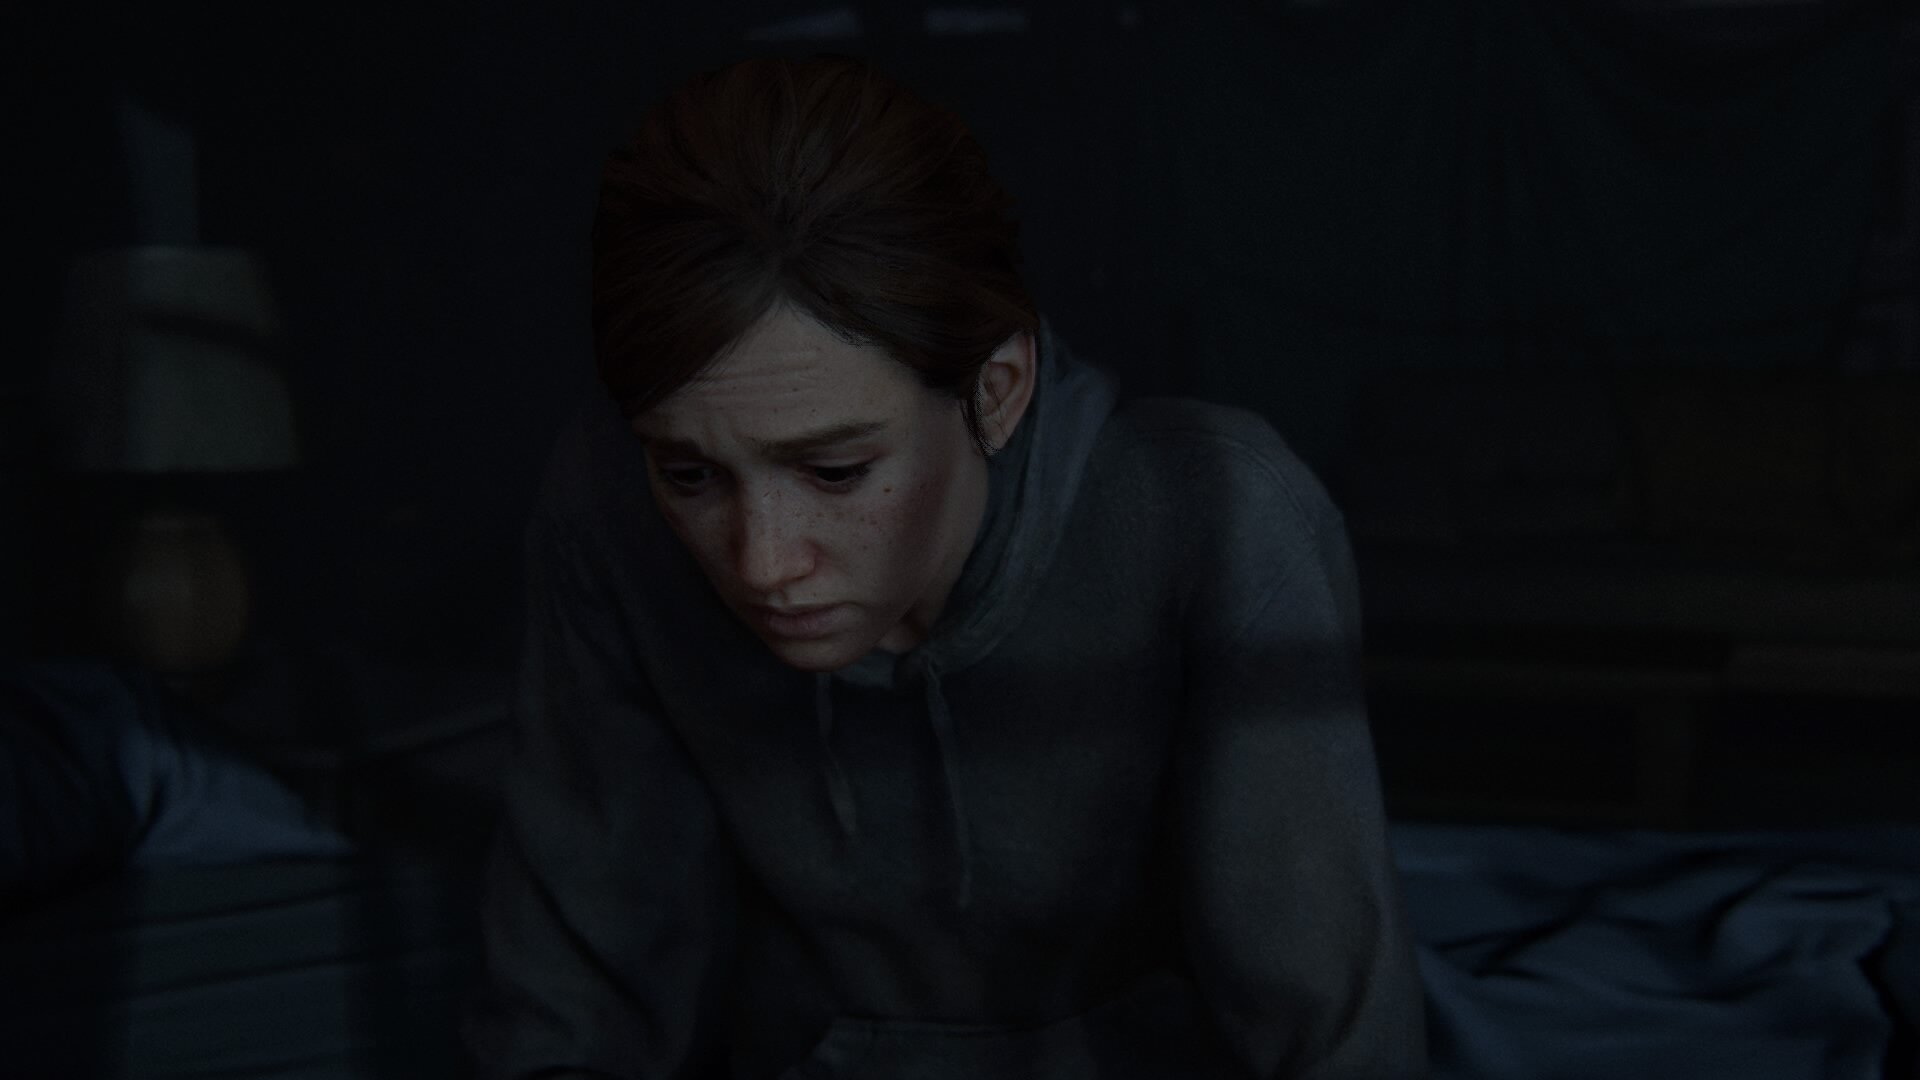 Ellie in The Last of Us Part 2